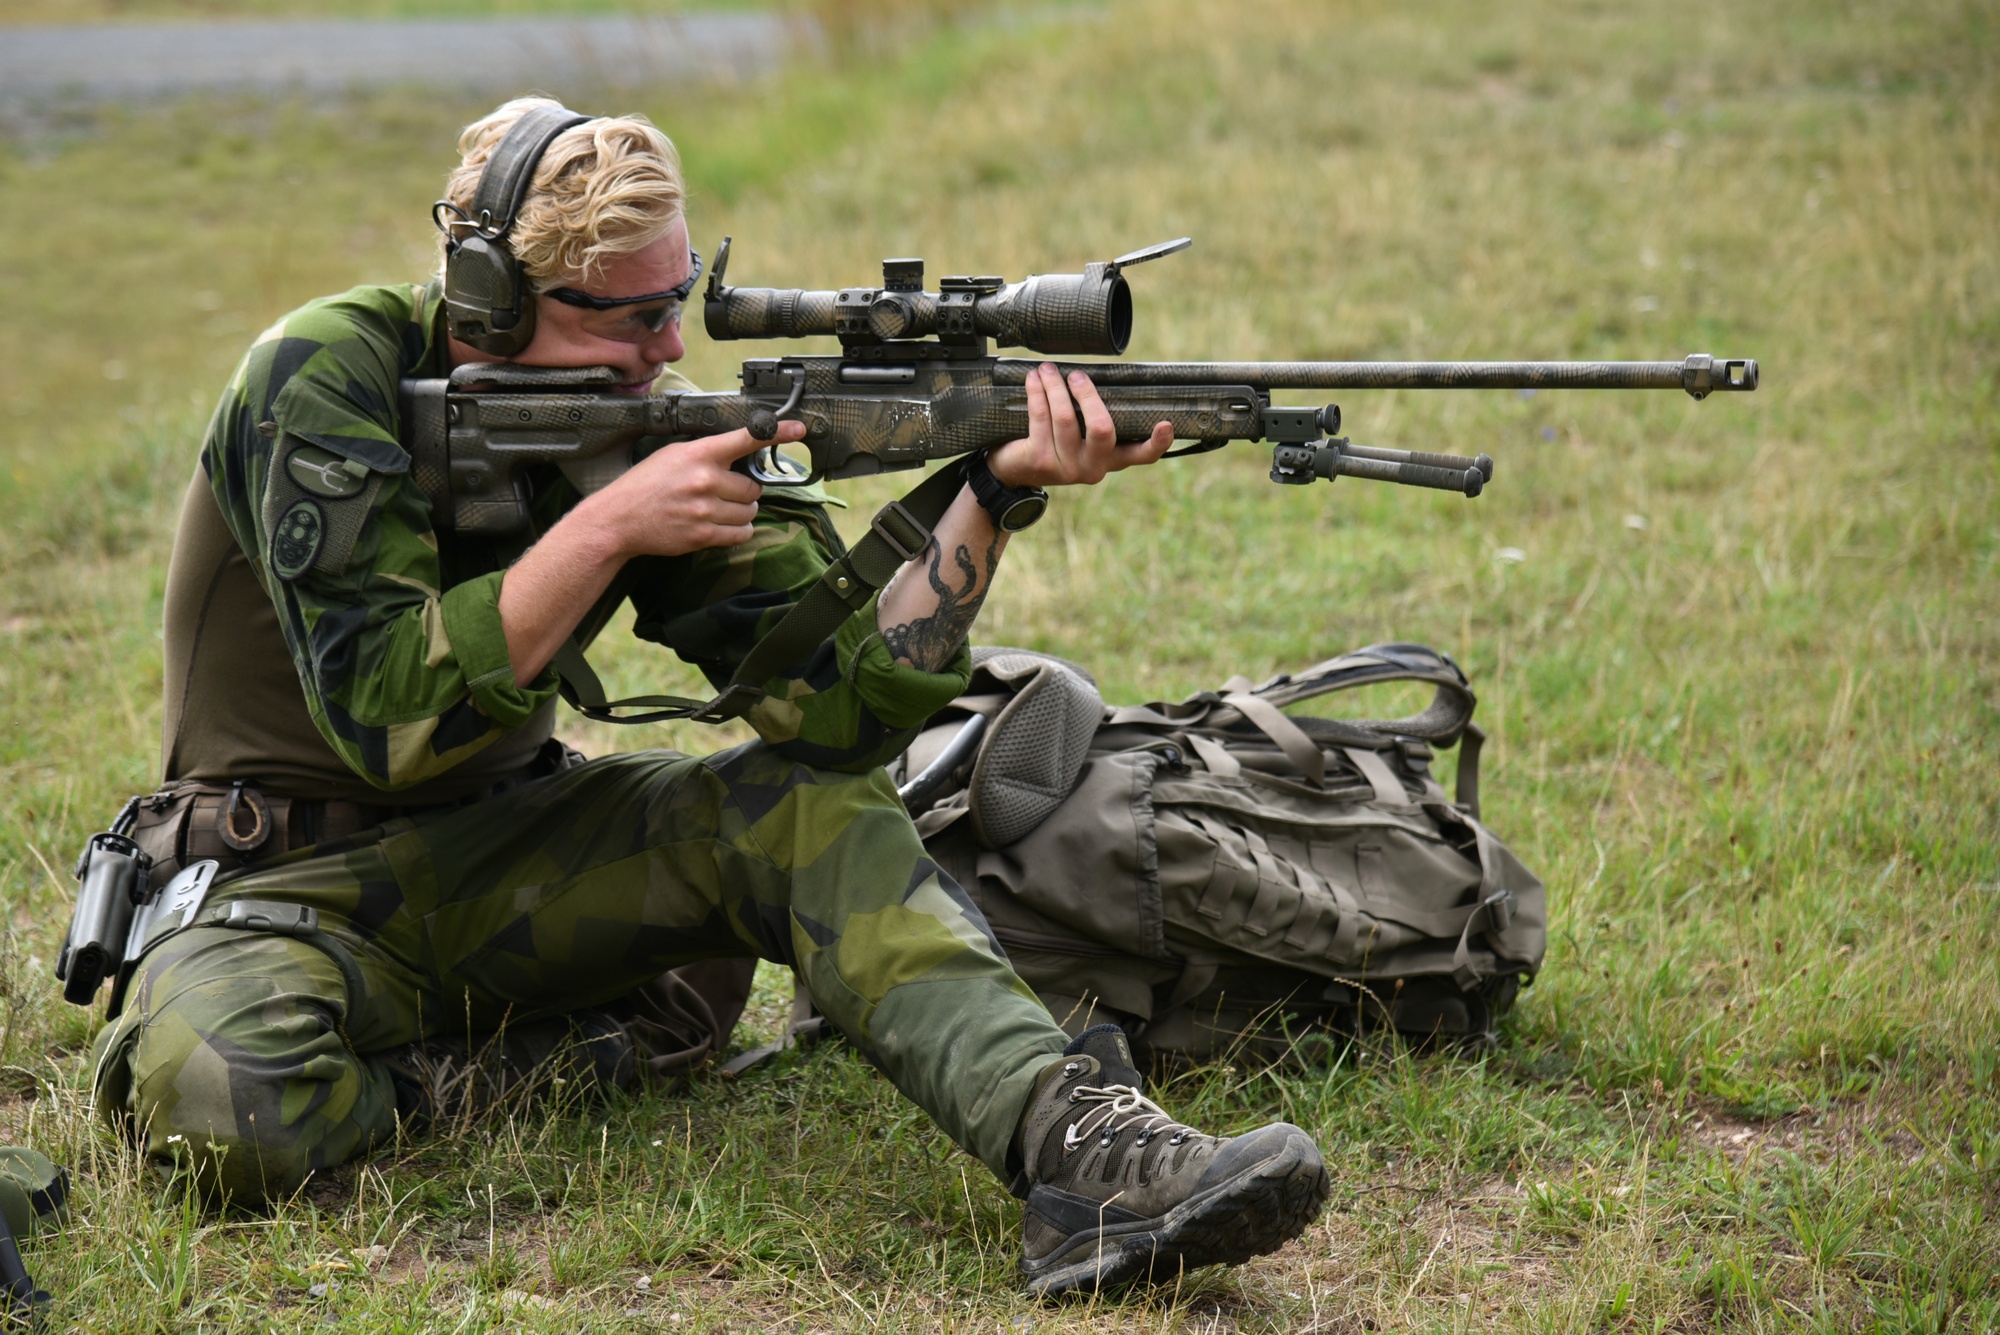 DVIDS - Images - European Best Sniper Team Competition 2022 [Image